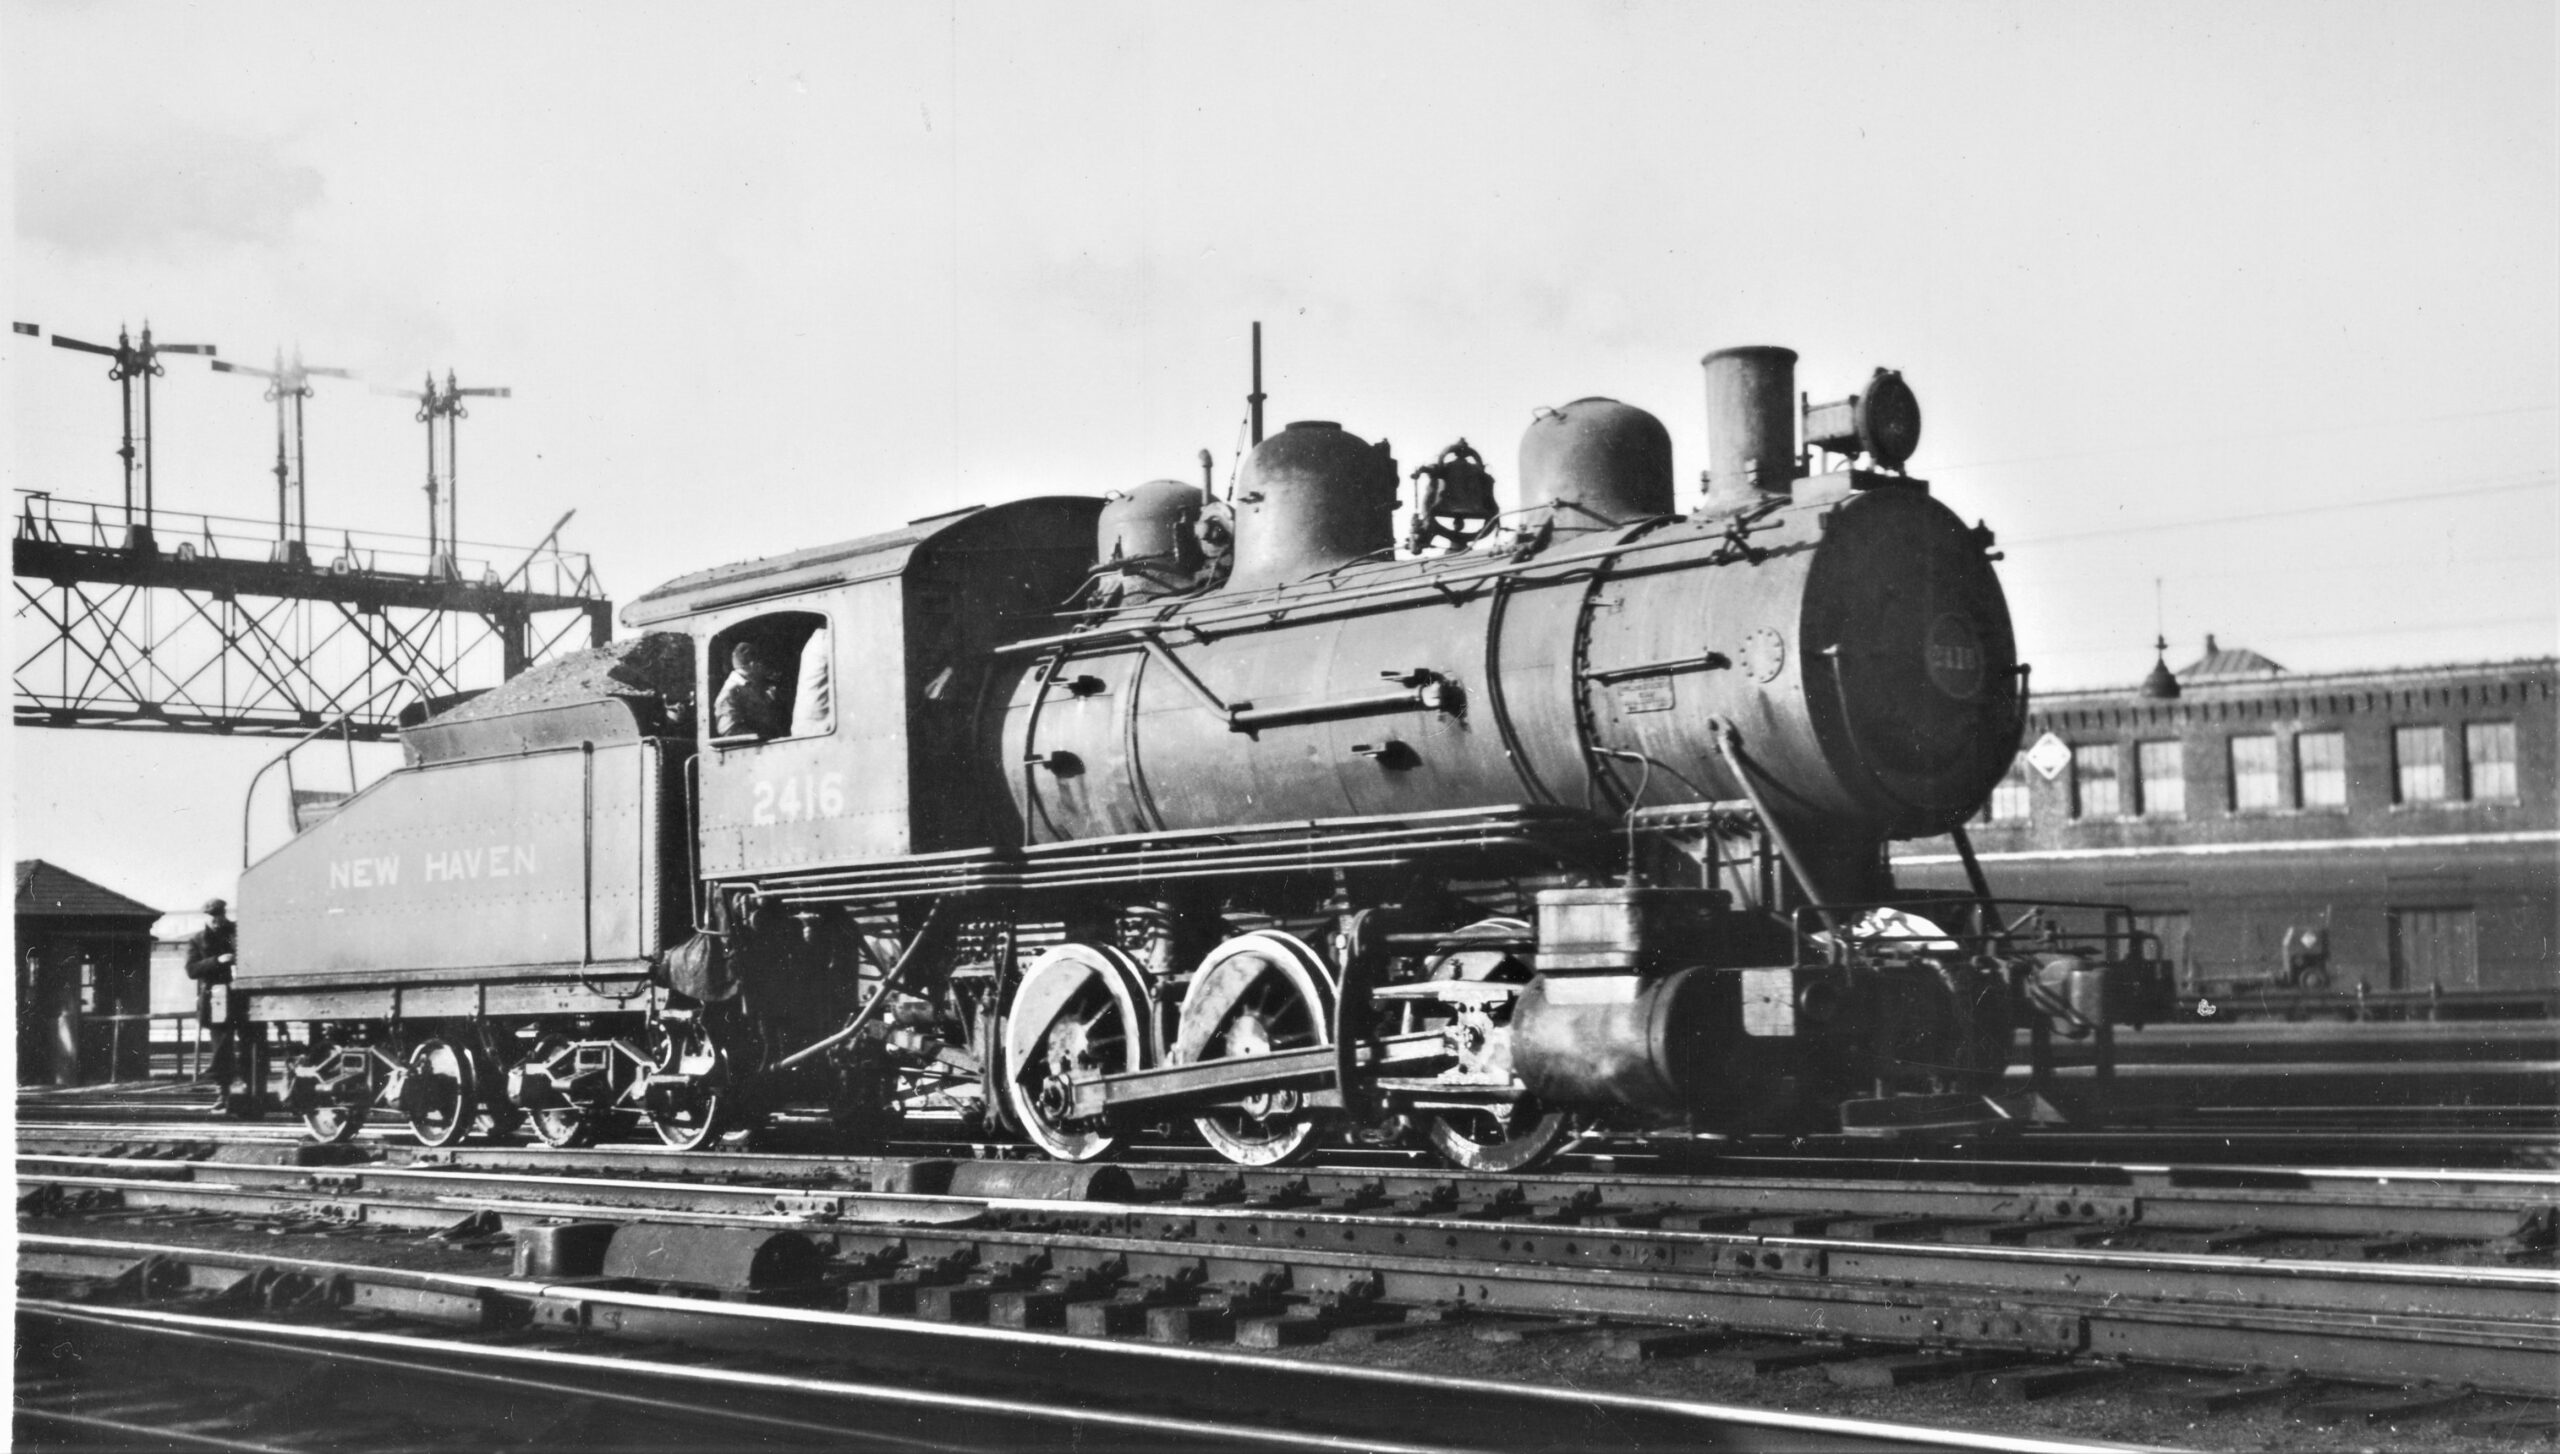 New York New Haven and Hartford Railroad | New Haven | Boston, Massachusetts | T-2b #2416 steam locomotive | December 4, 1937